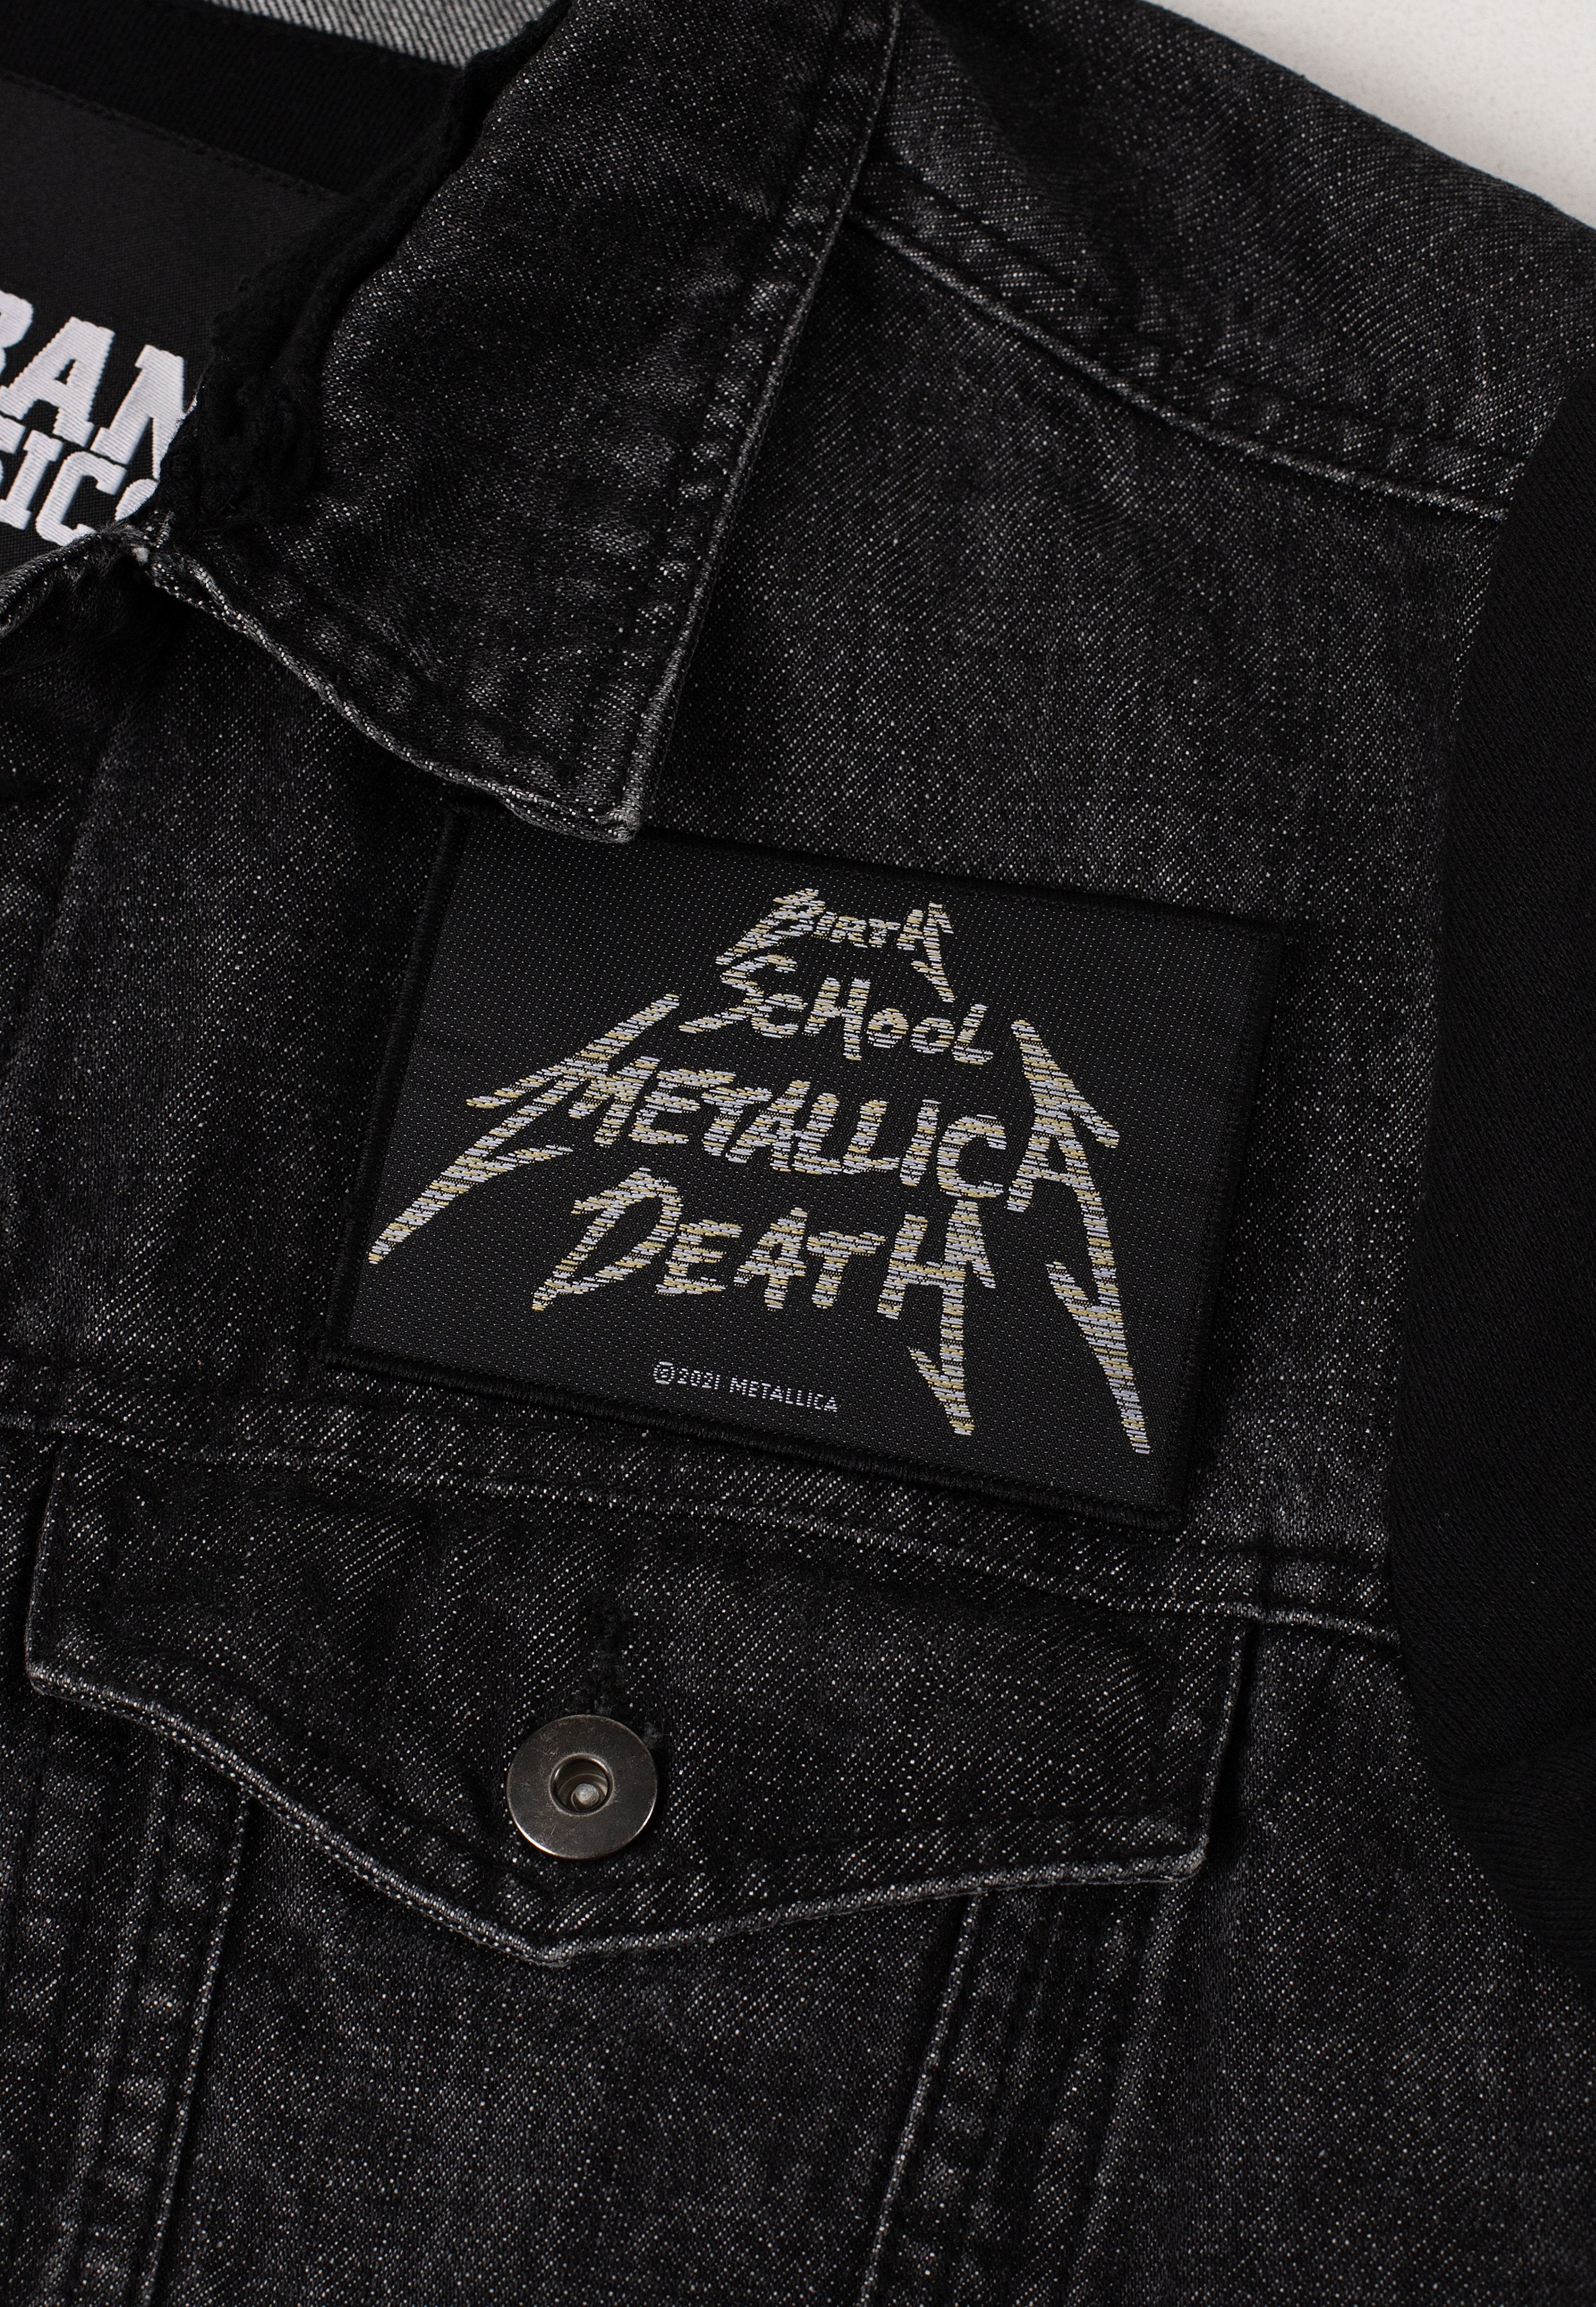 Metallica - Birth, School, Metallica, Death - Patch